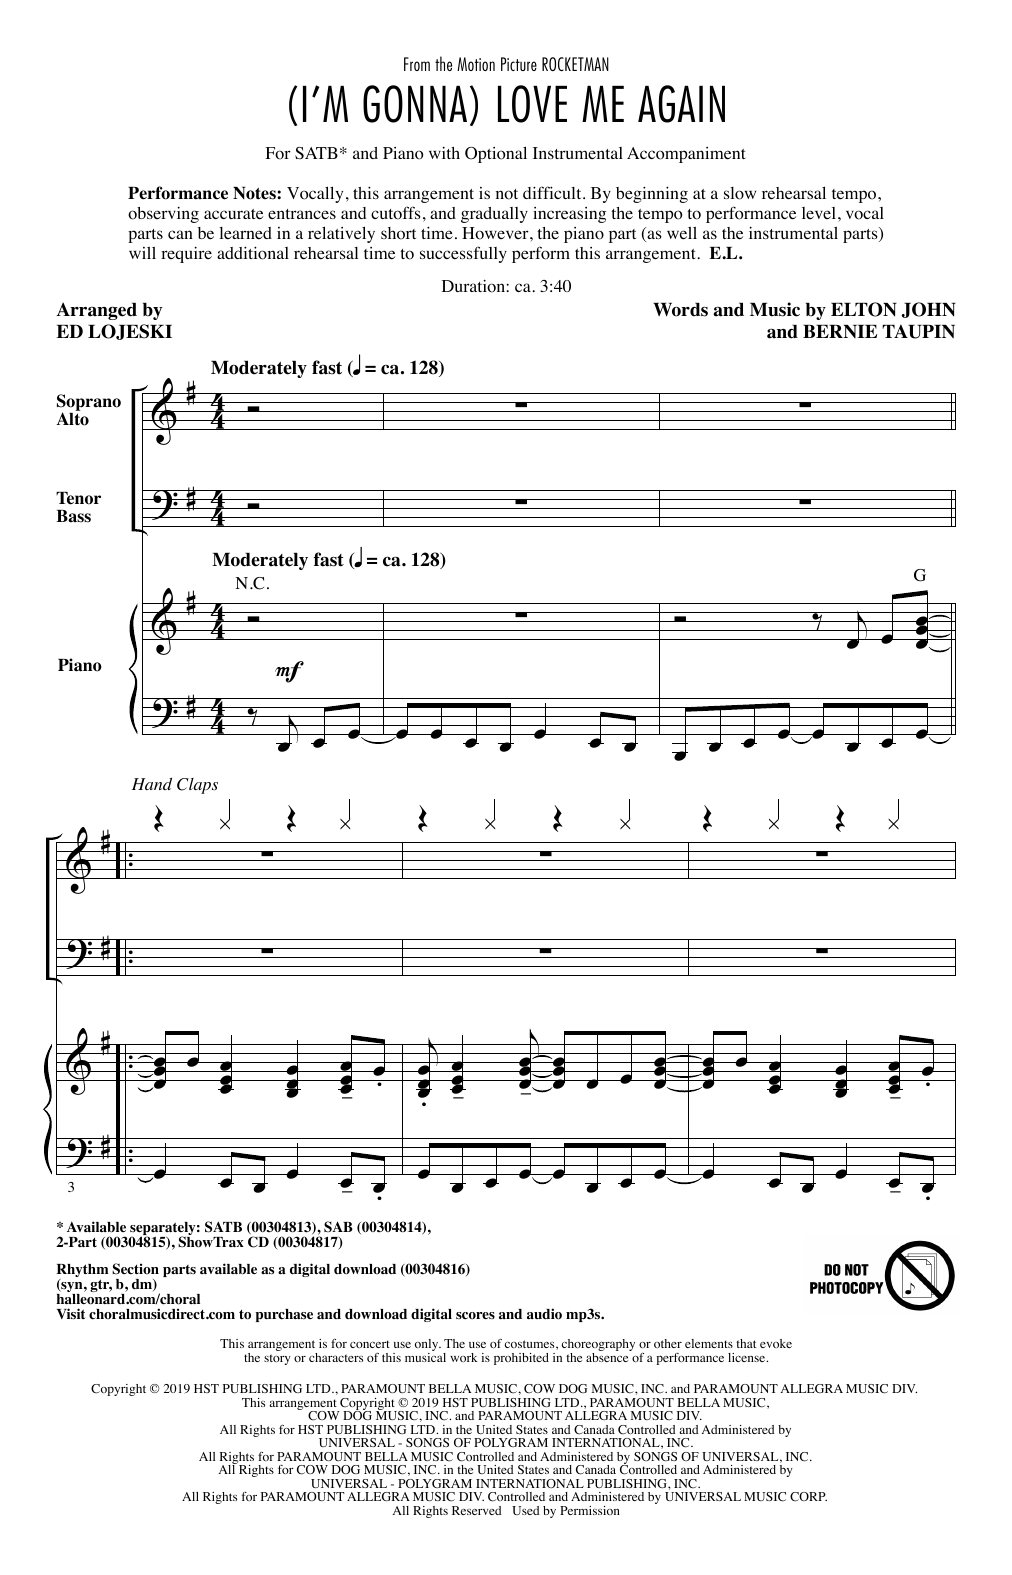 Elton John & Taron Egerton (I'm Gonna) Love Me Again (from Rocketman) (arr. Ed Lojeski) Sheet Music Notes & Chords for SAB Choir - Download or Print PDF